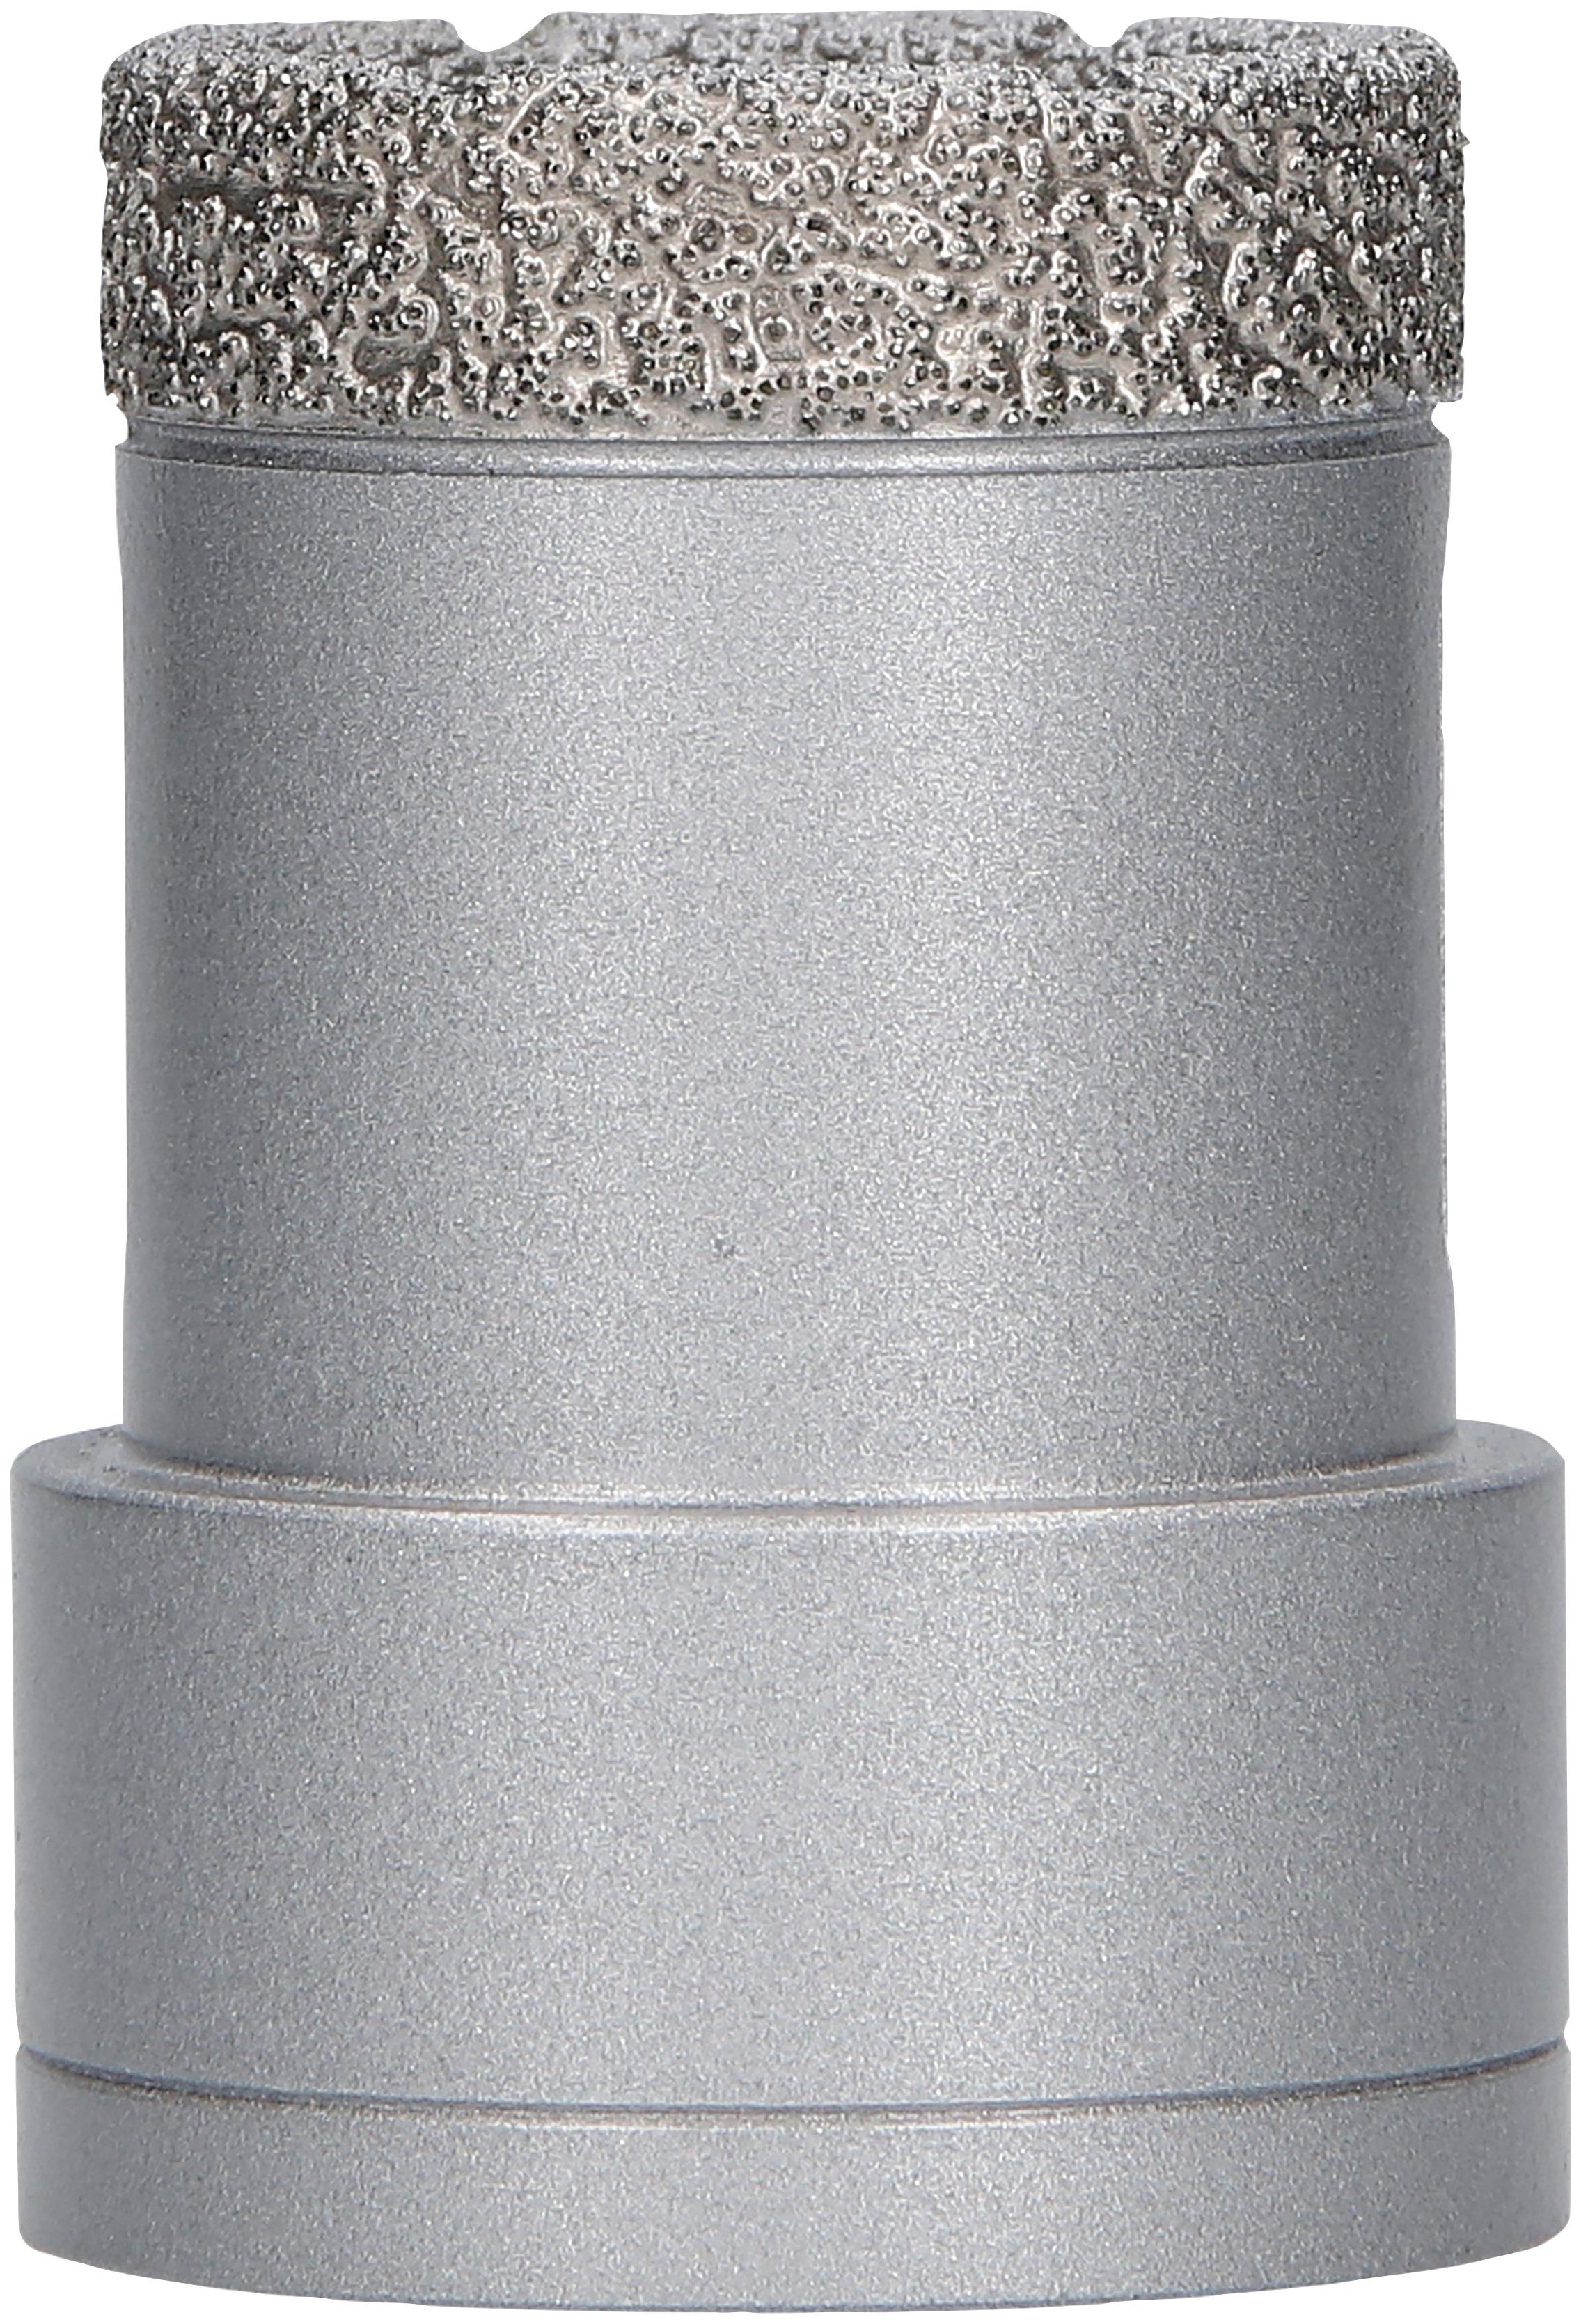 Bosch Professional Diamanttrockenbohrer Ceramic x 35 mm Dry Ø 35 for Best mm, X-LOCK 35 Speed